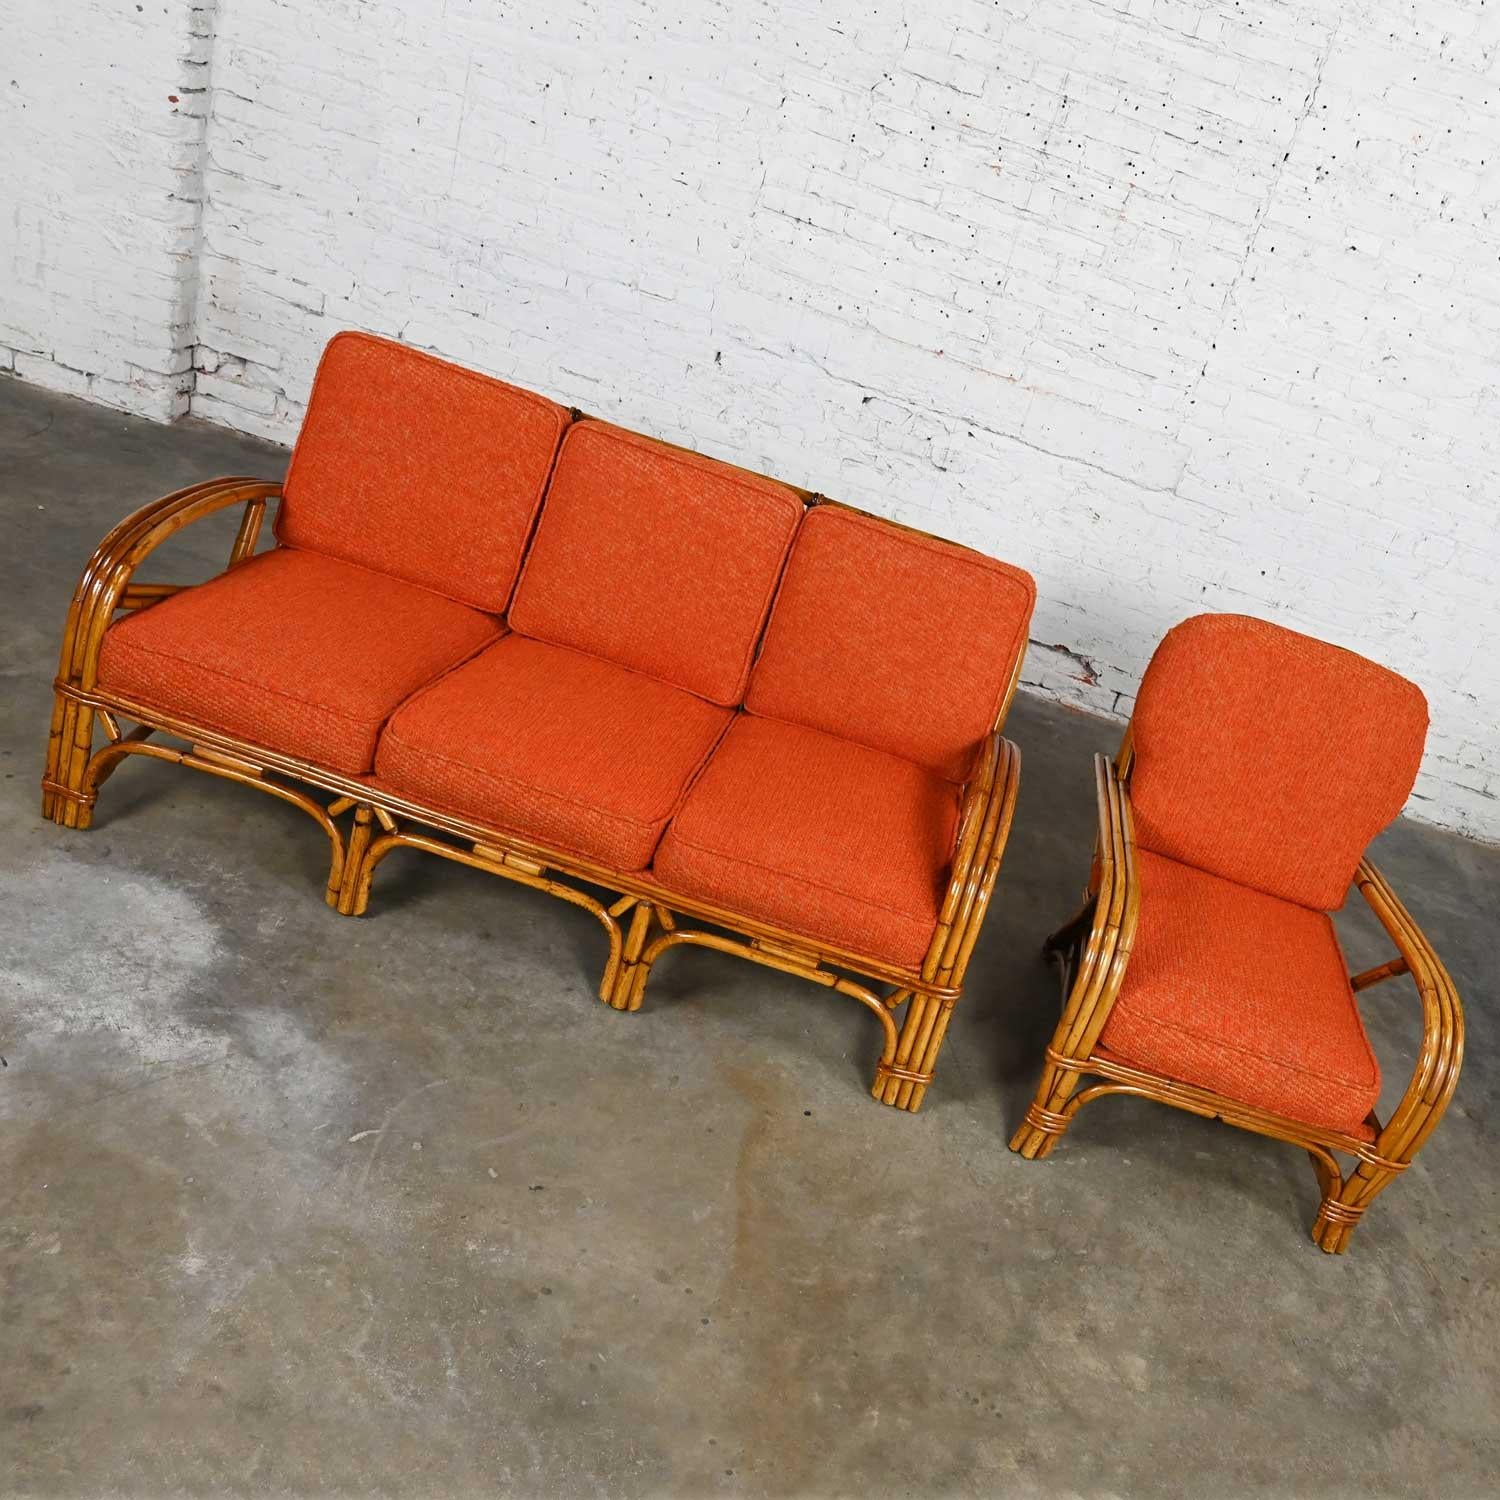 Triple Strand Rattan Sofa & Chair Orange Fabric Cushions Style Heywood Wakefield For Sale 3